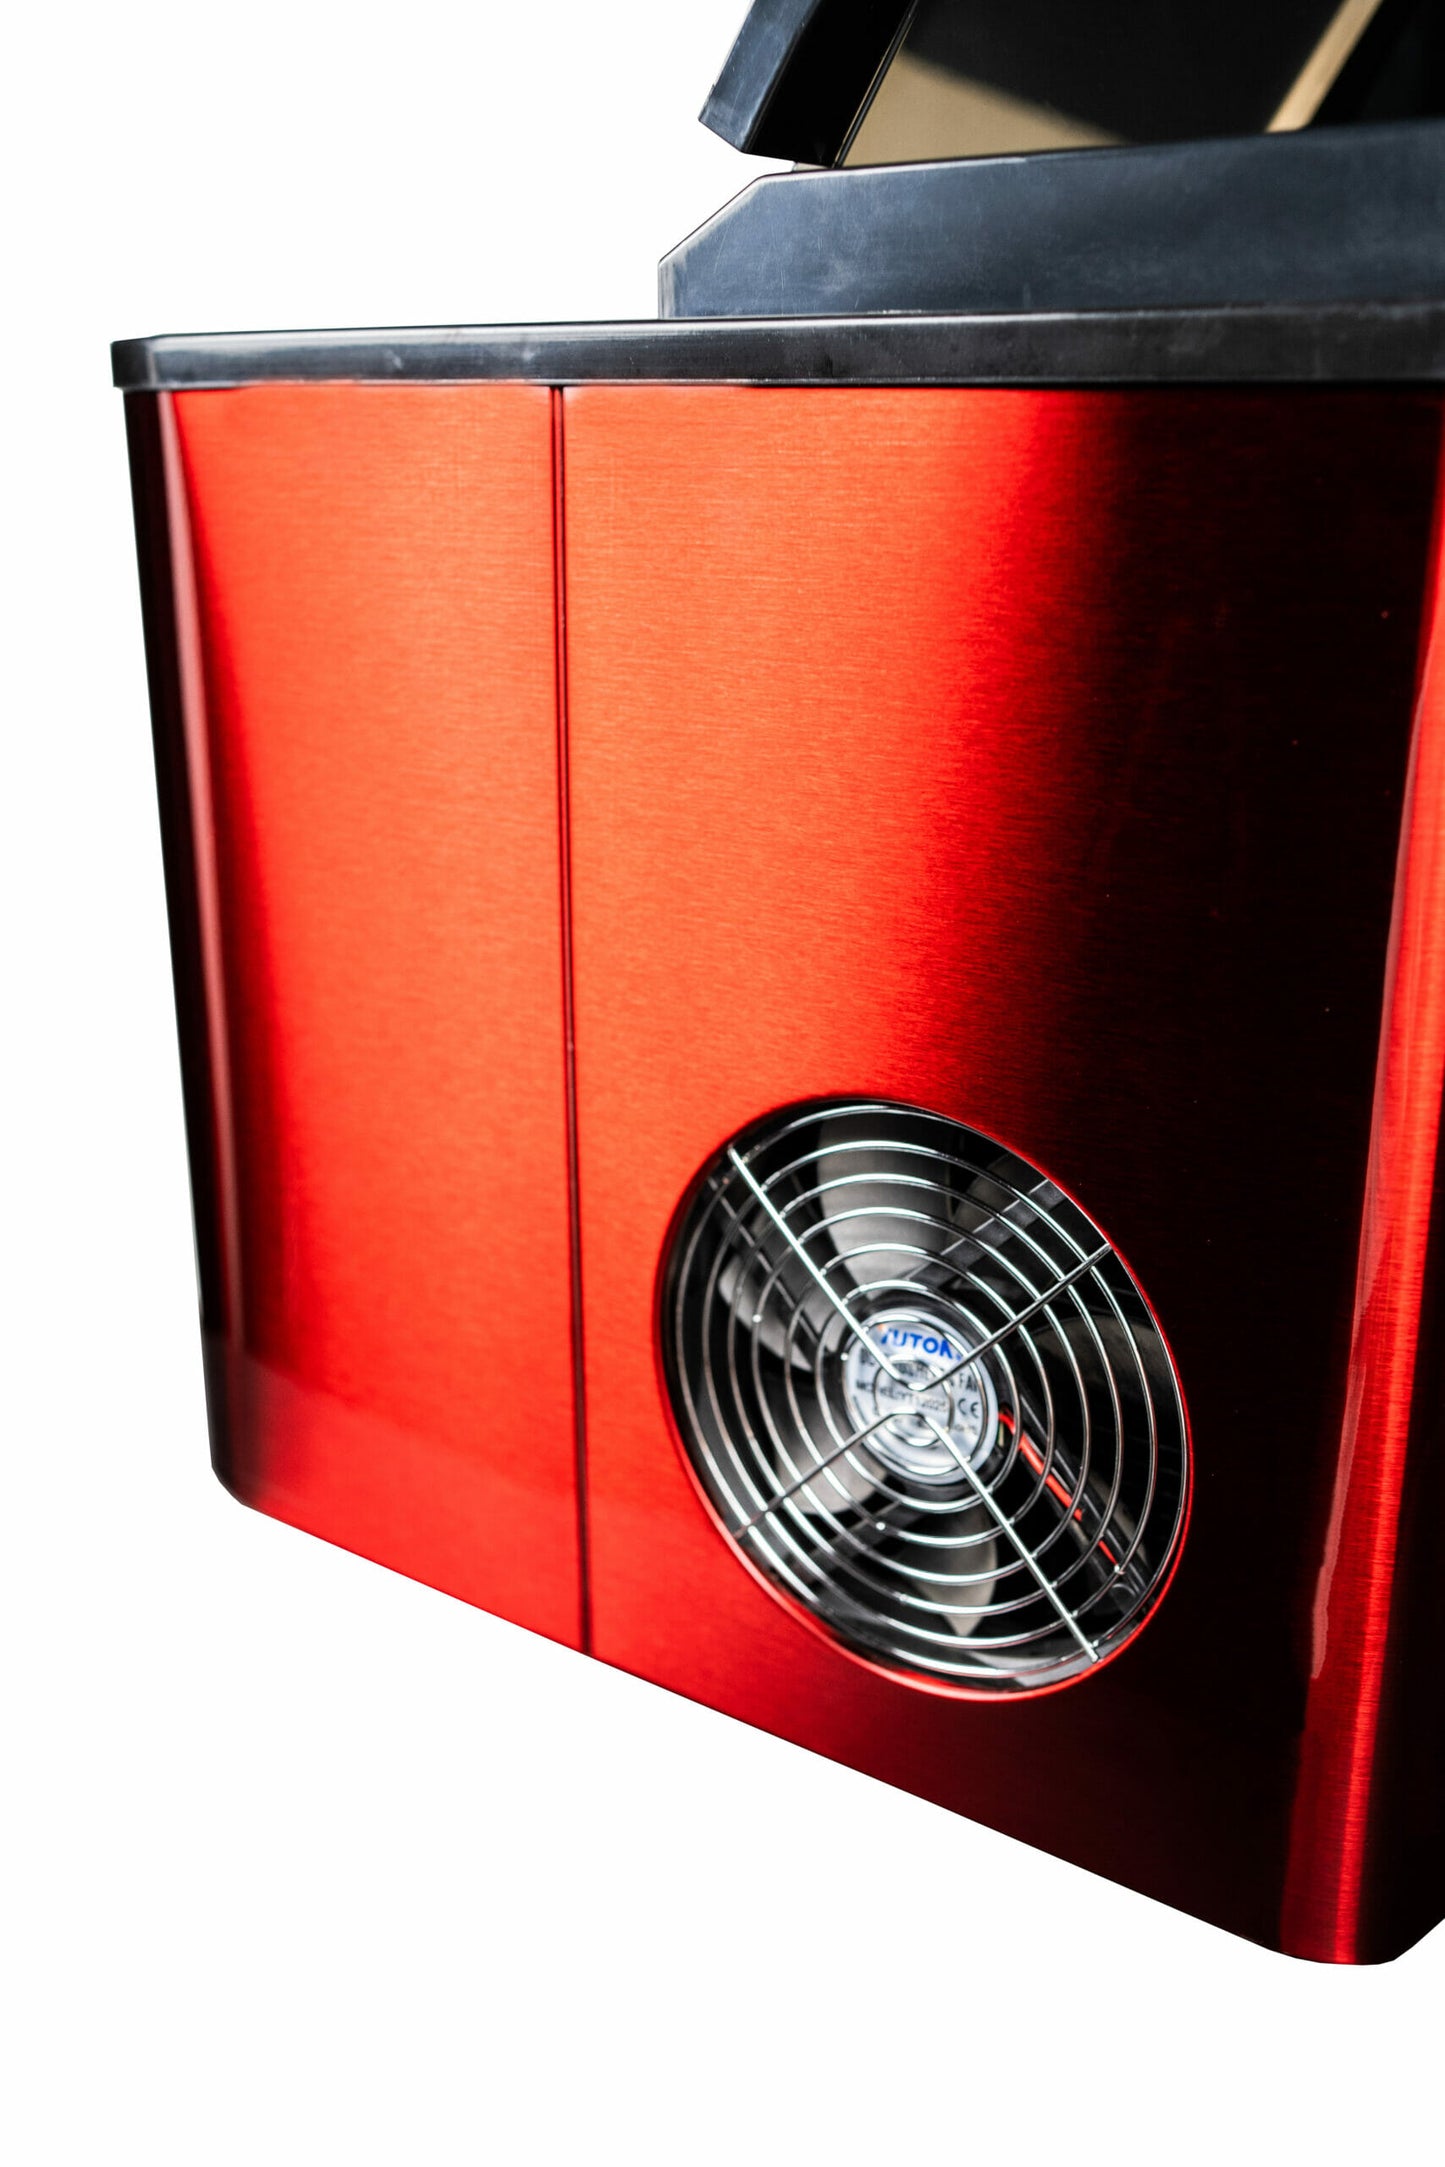 Danby 25 lbs. Countertop Ice Maker in Red - DIM2500RDB